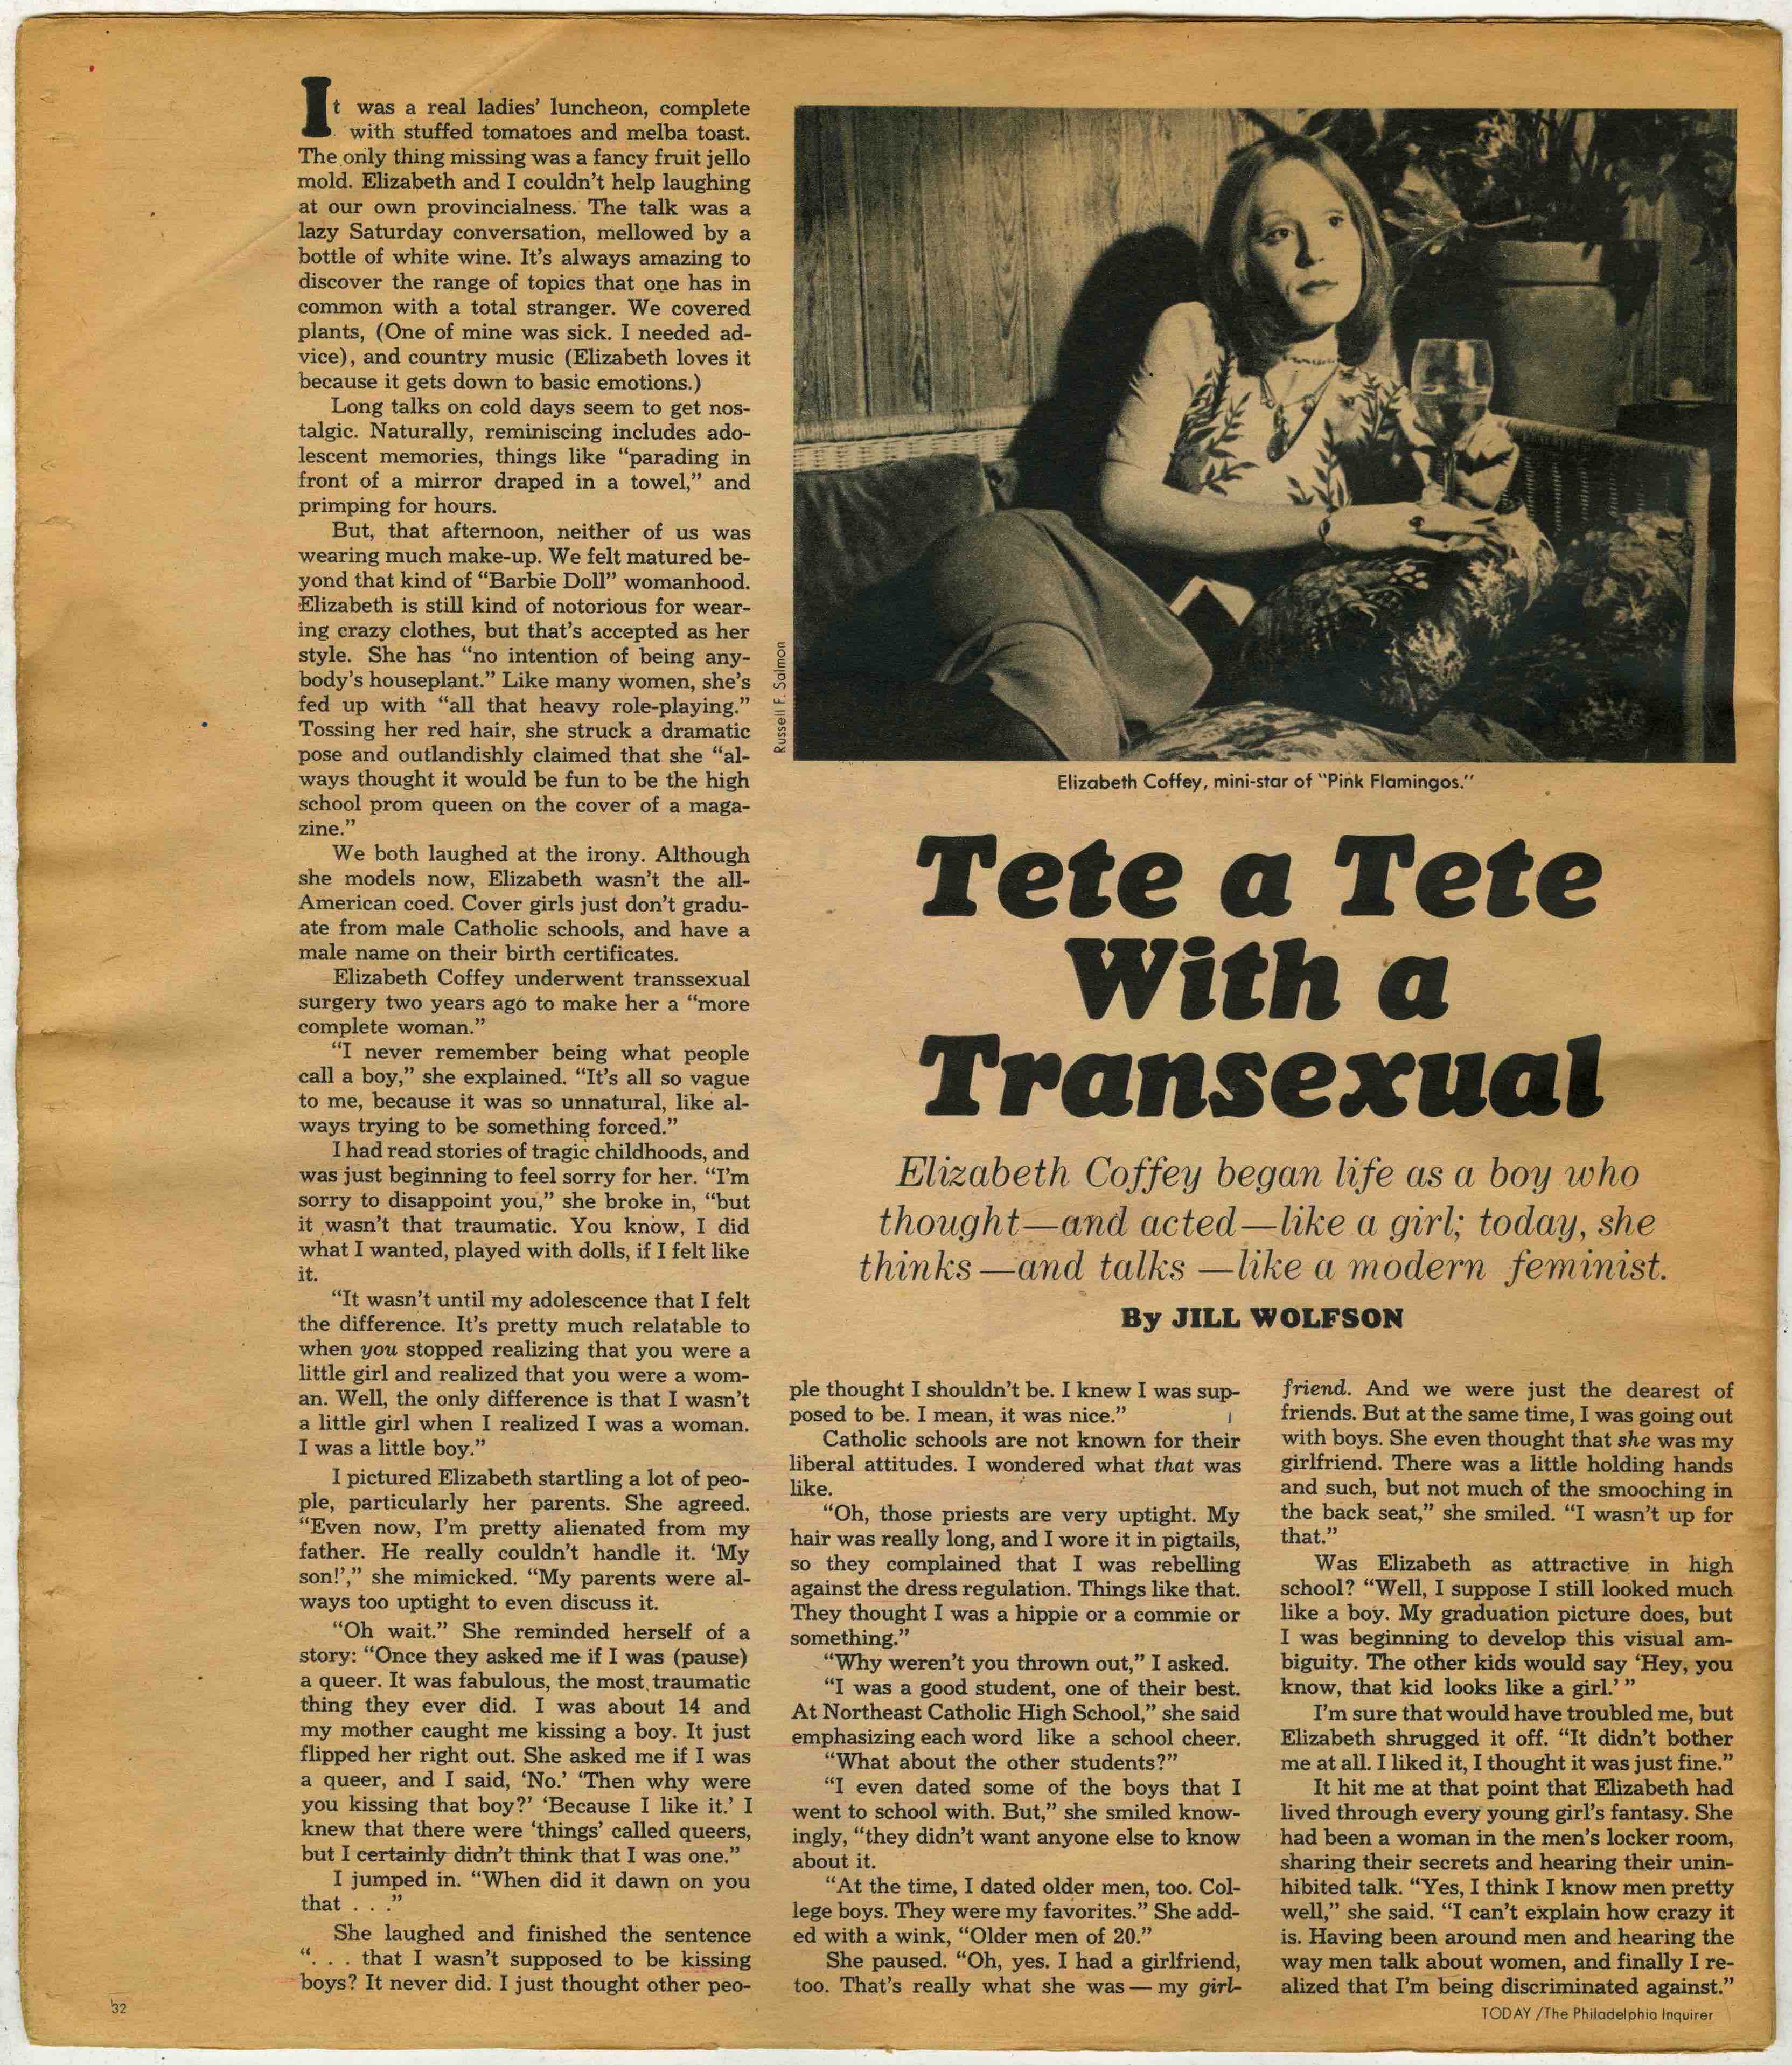 Philadelphia Inquirer profile of Elizabeth Coffey, 1973.